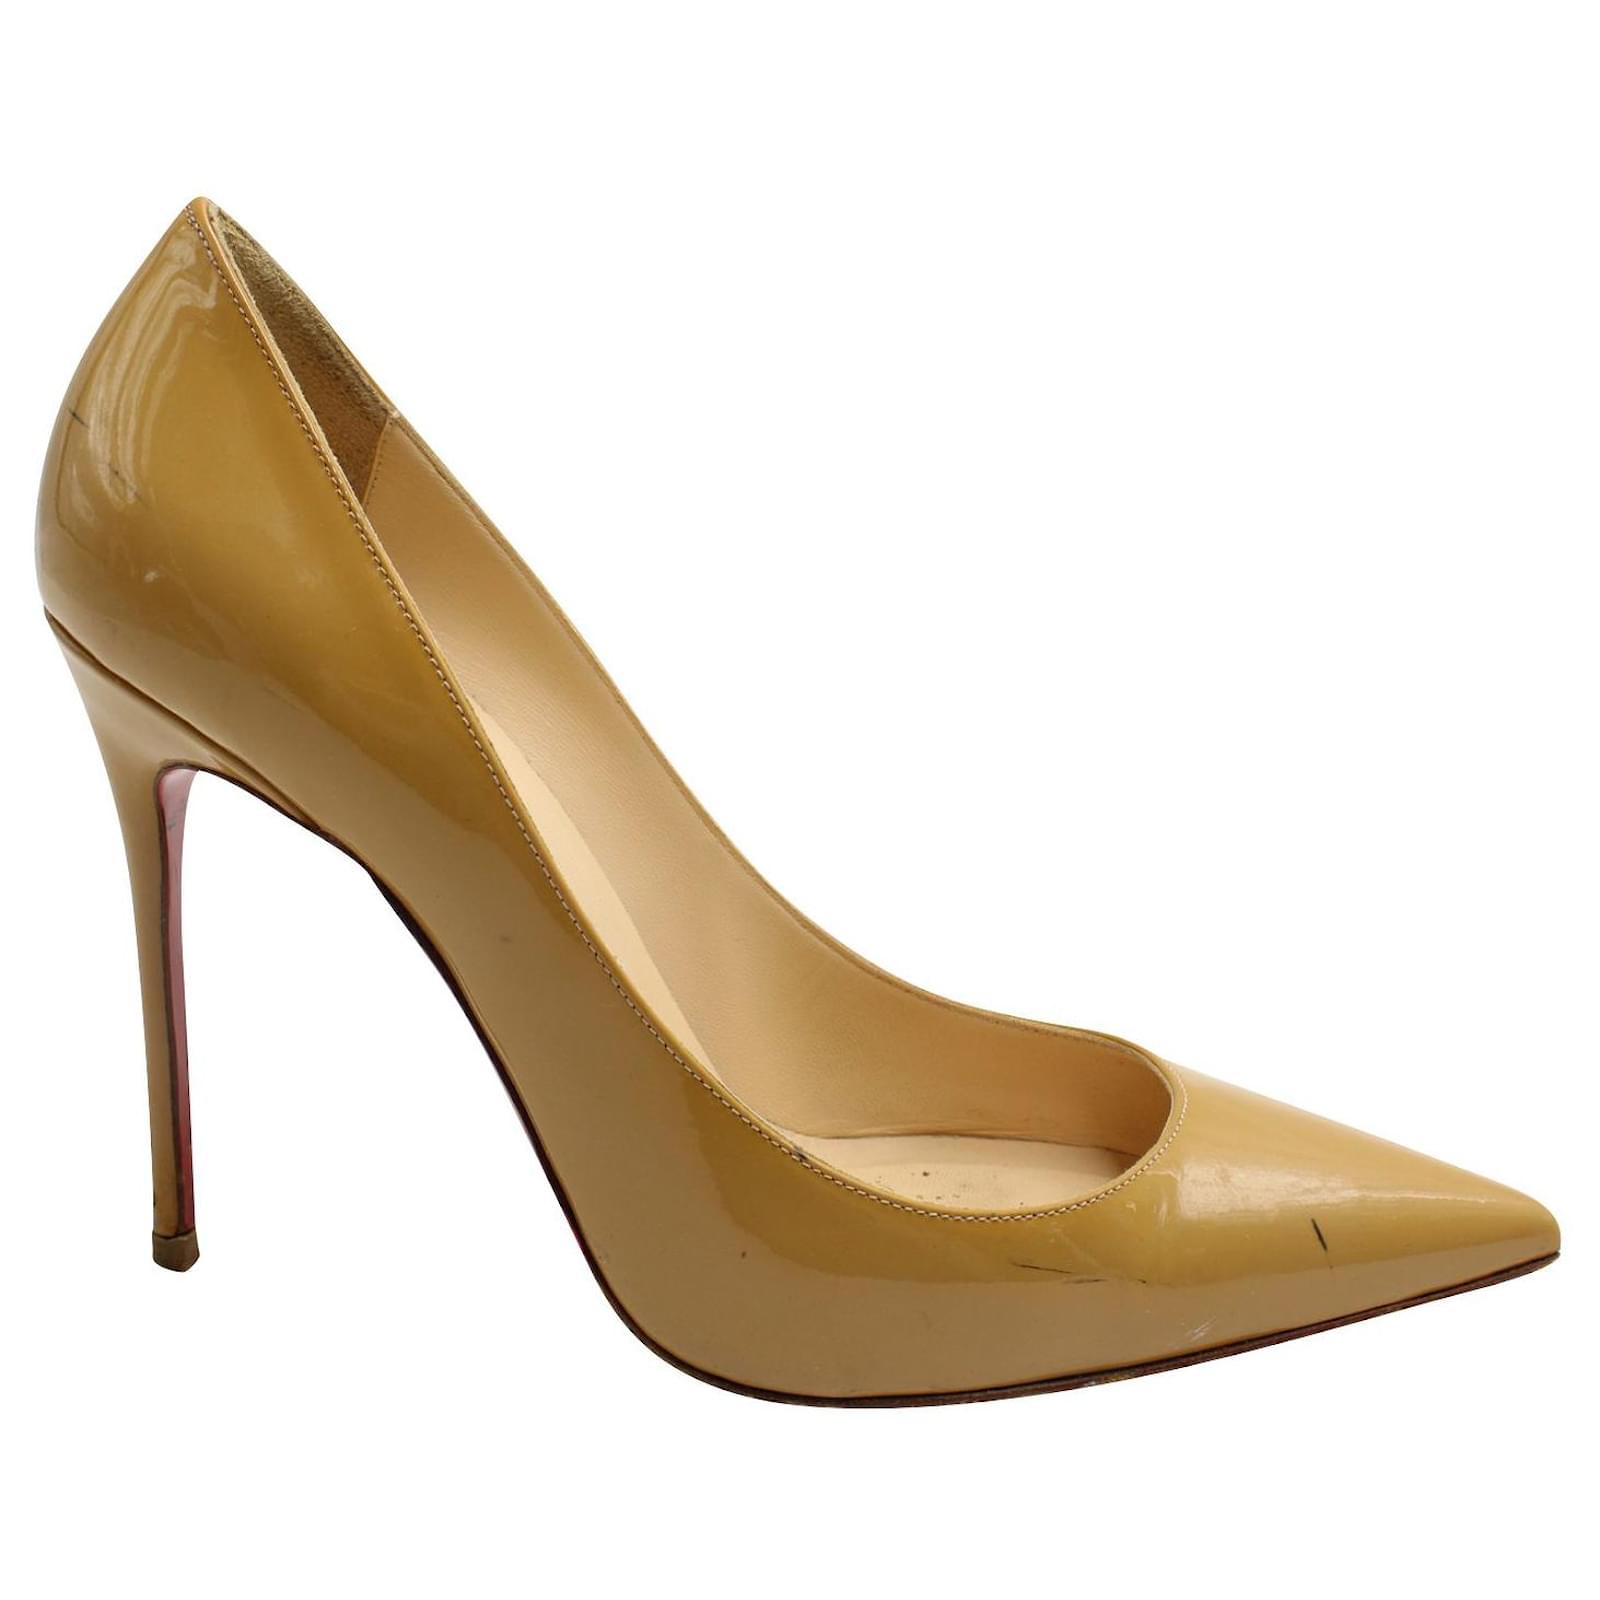 classic louboutin heels